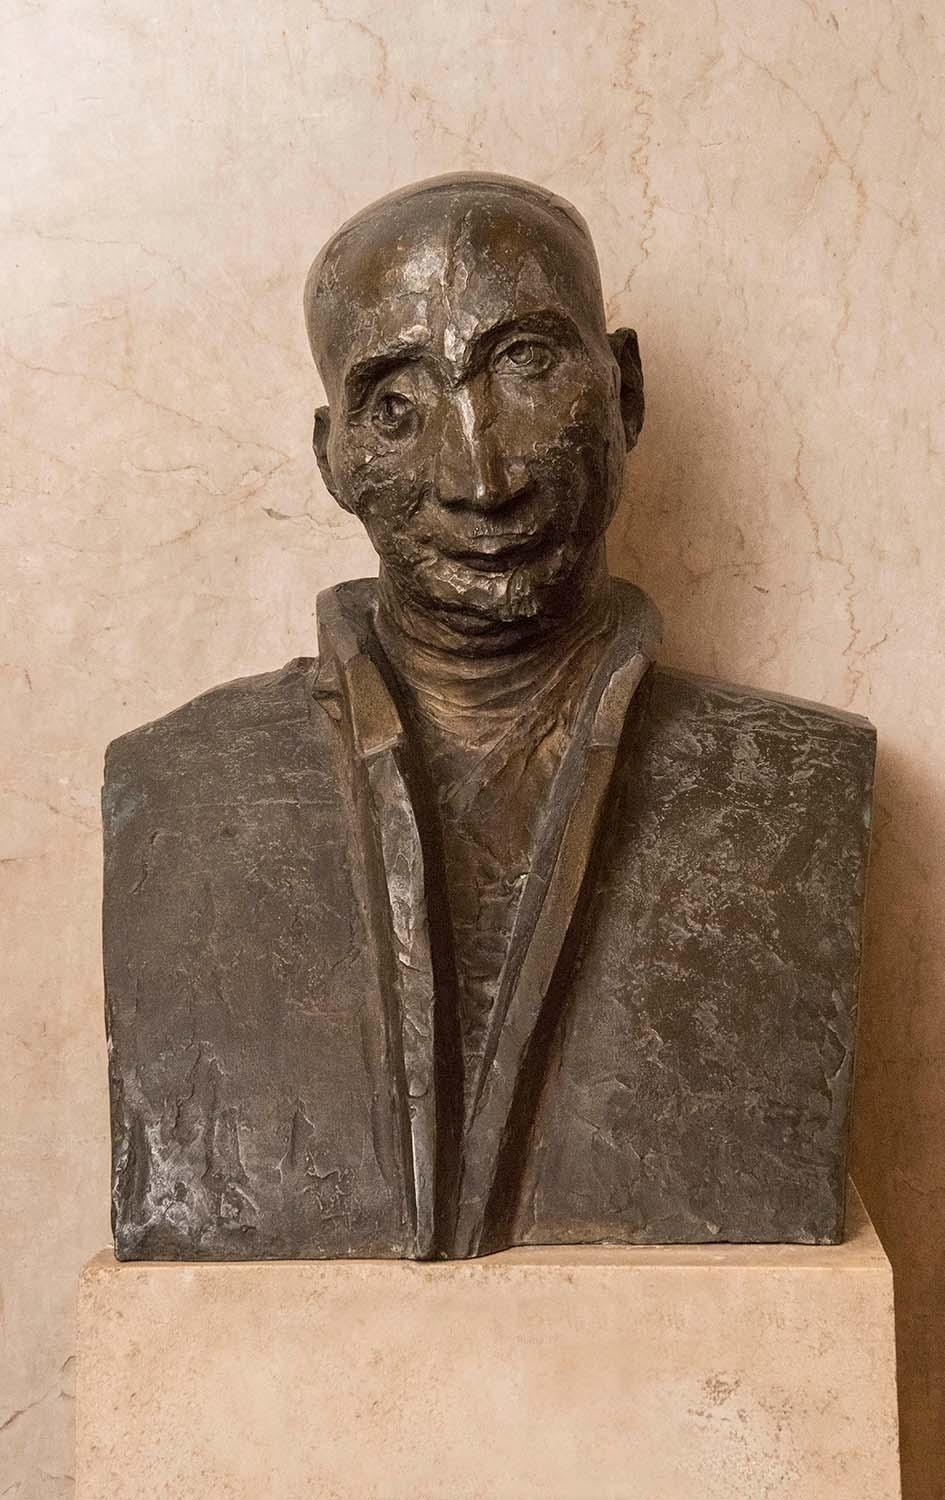 Bust of Gaetano Carolei, Gold Medal of Military Valour recipient